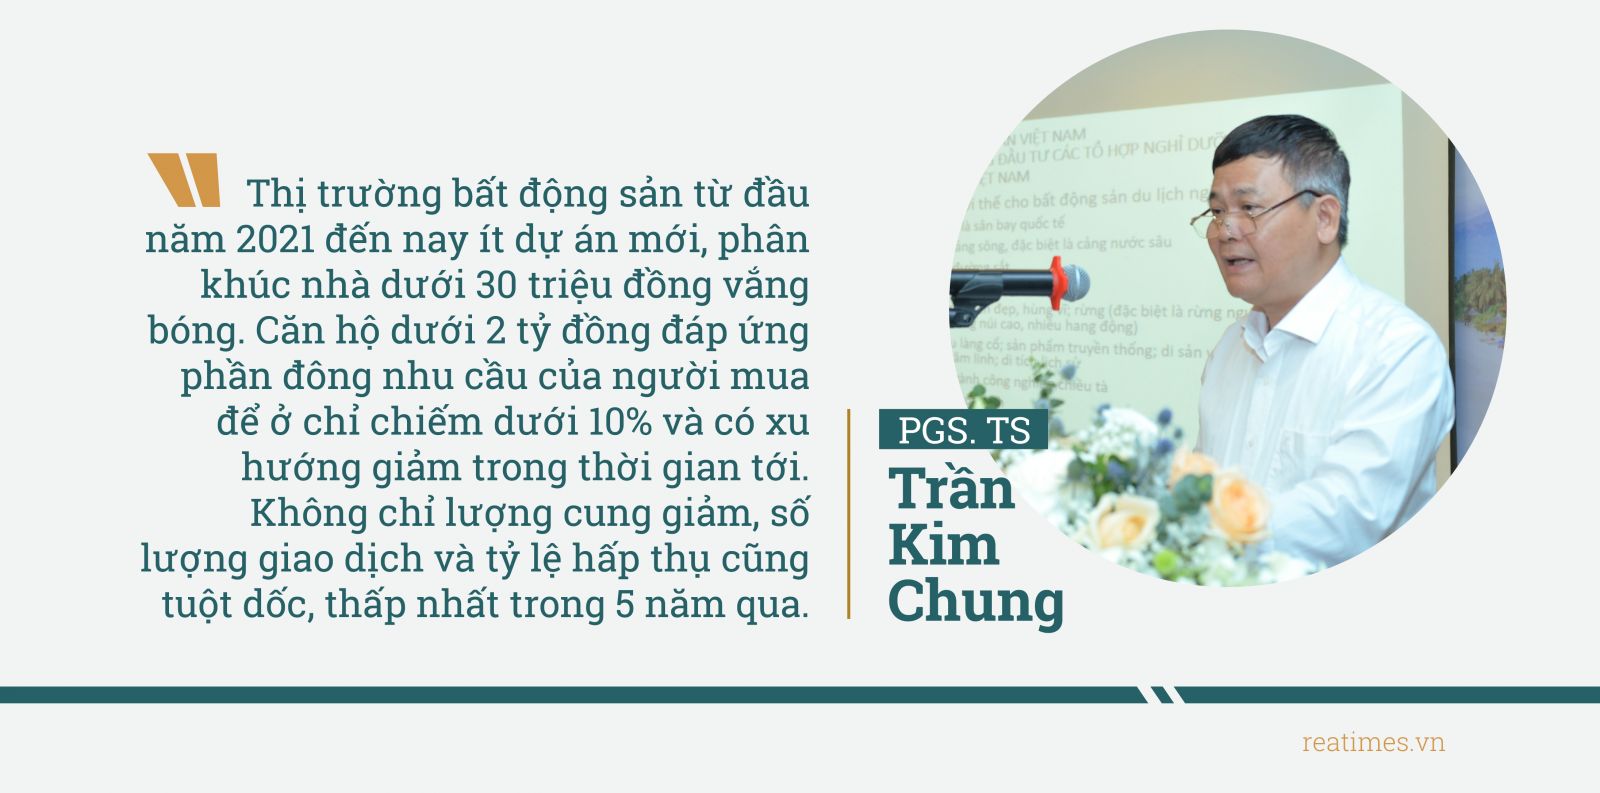 PGS TRẦN KIM CHUNG 